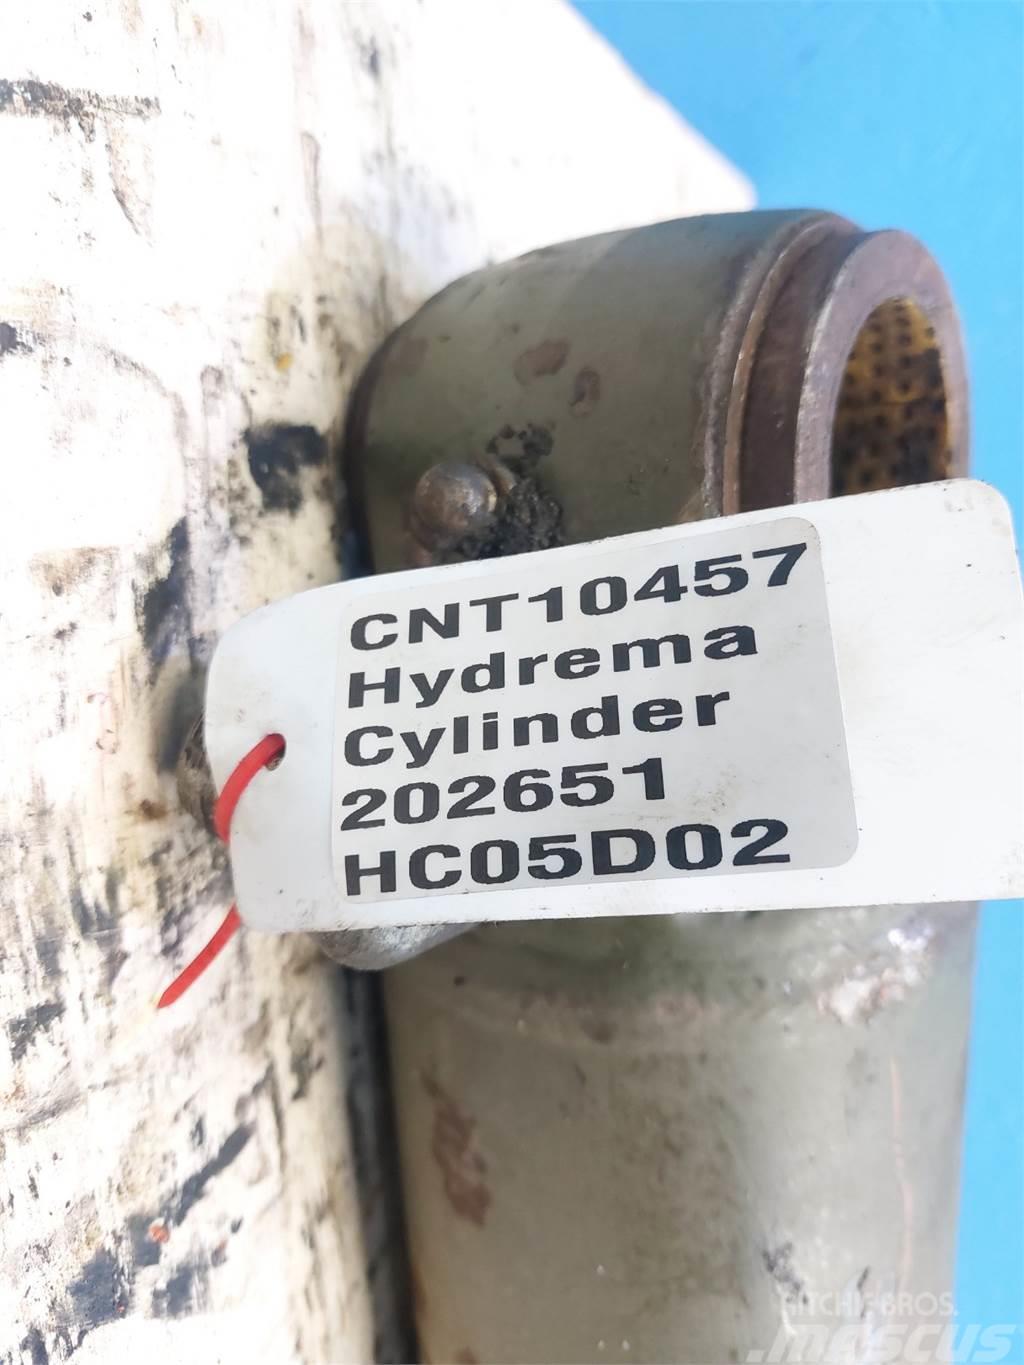 Hydrema 906B Backhoes